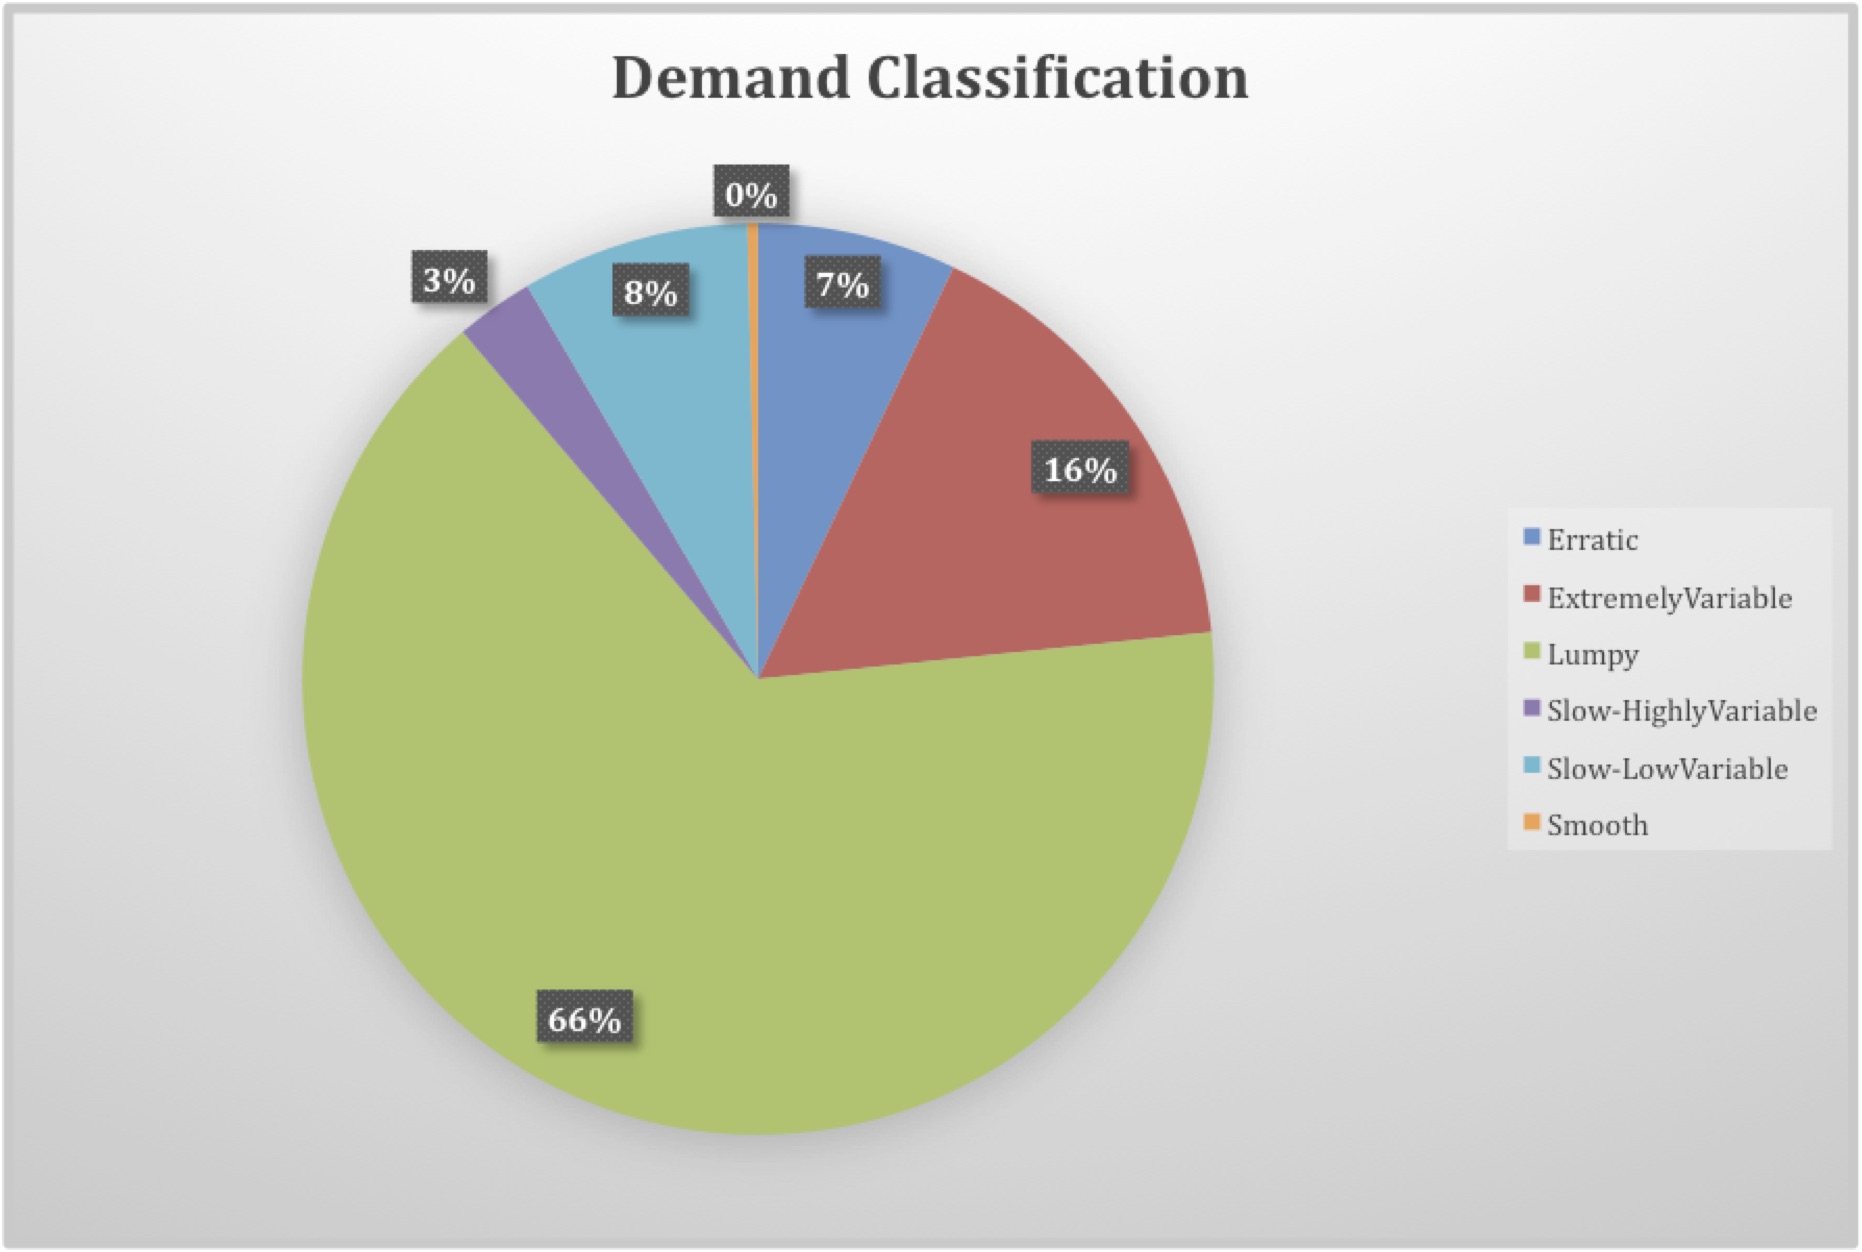 DemandClassification_LLamasoft